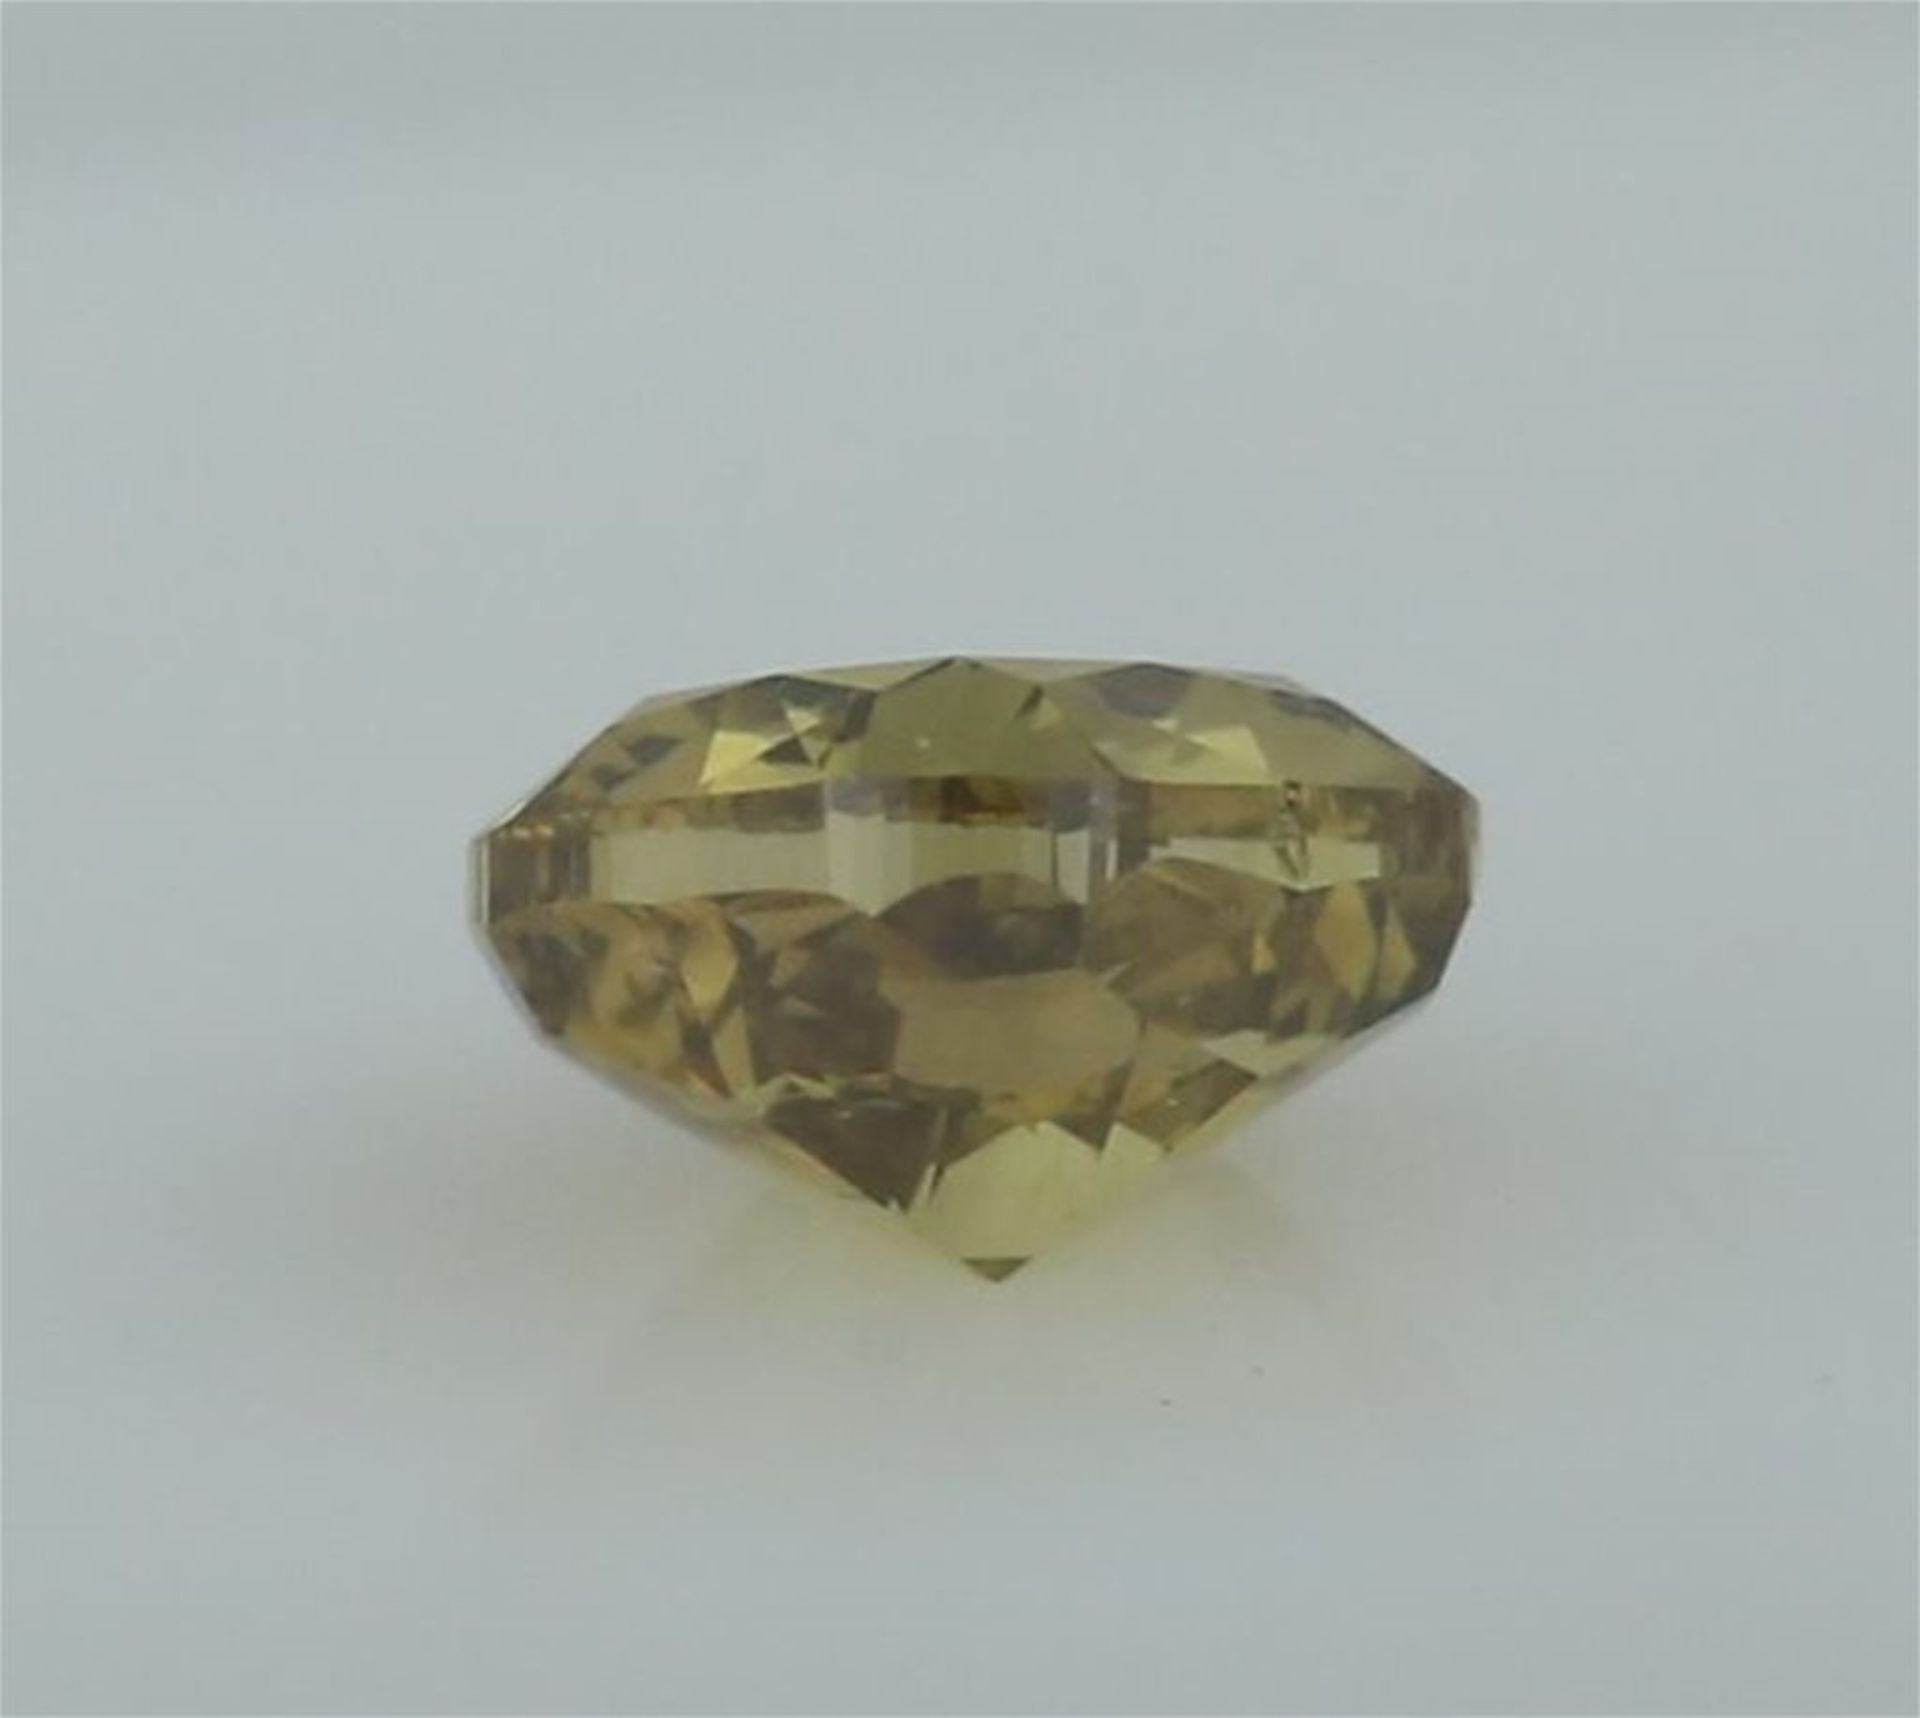 IGI Certified 0.45 ct. Diamond - Fancy Brownish Yellow - I 1 UNTREATED - Image 6 of 7